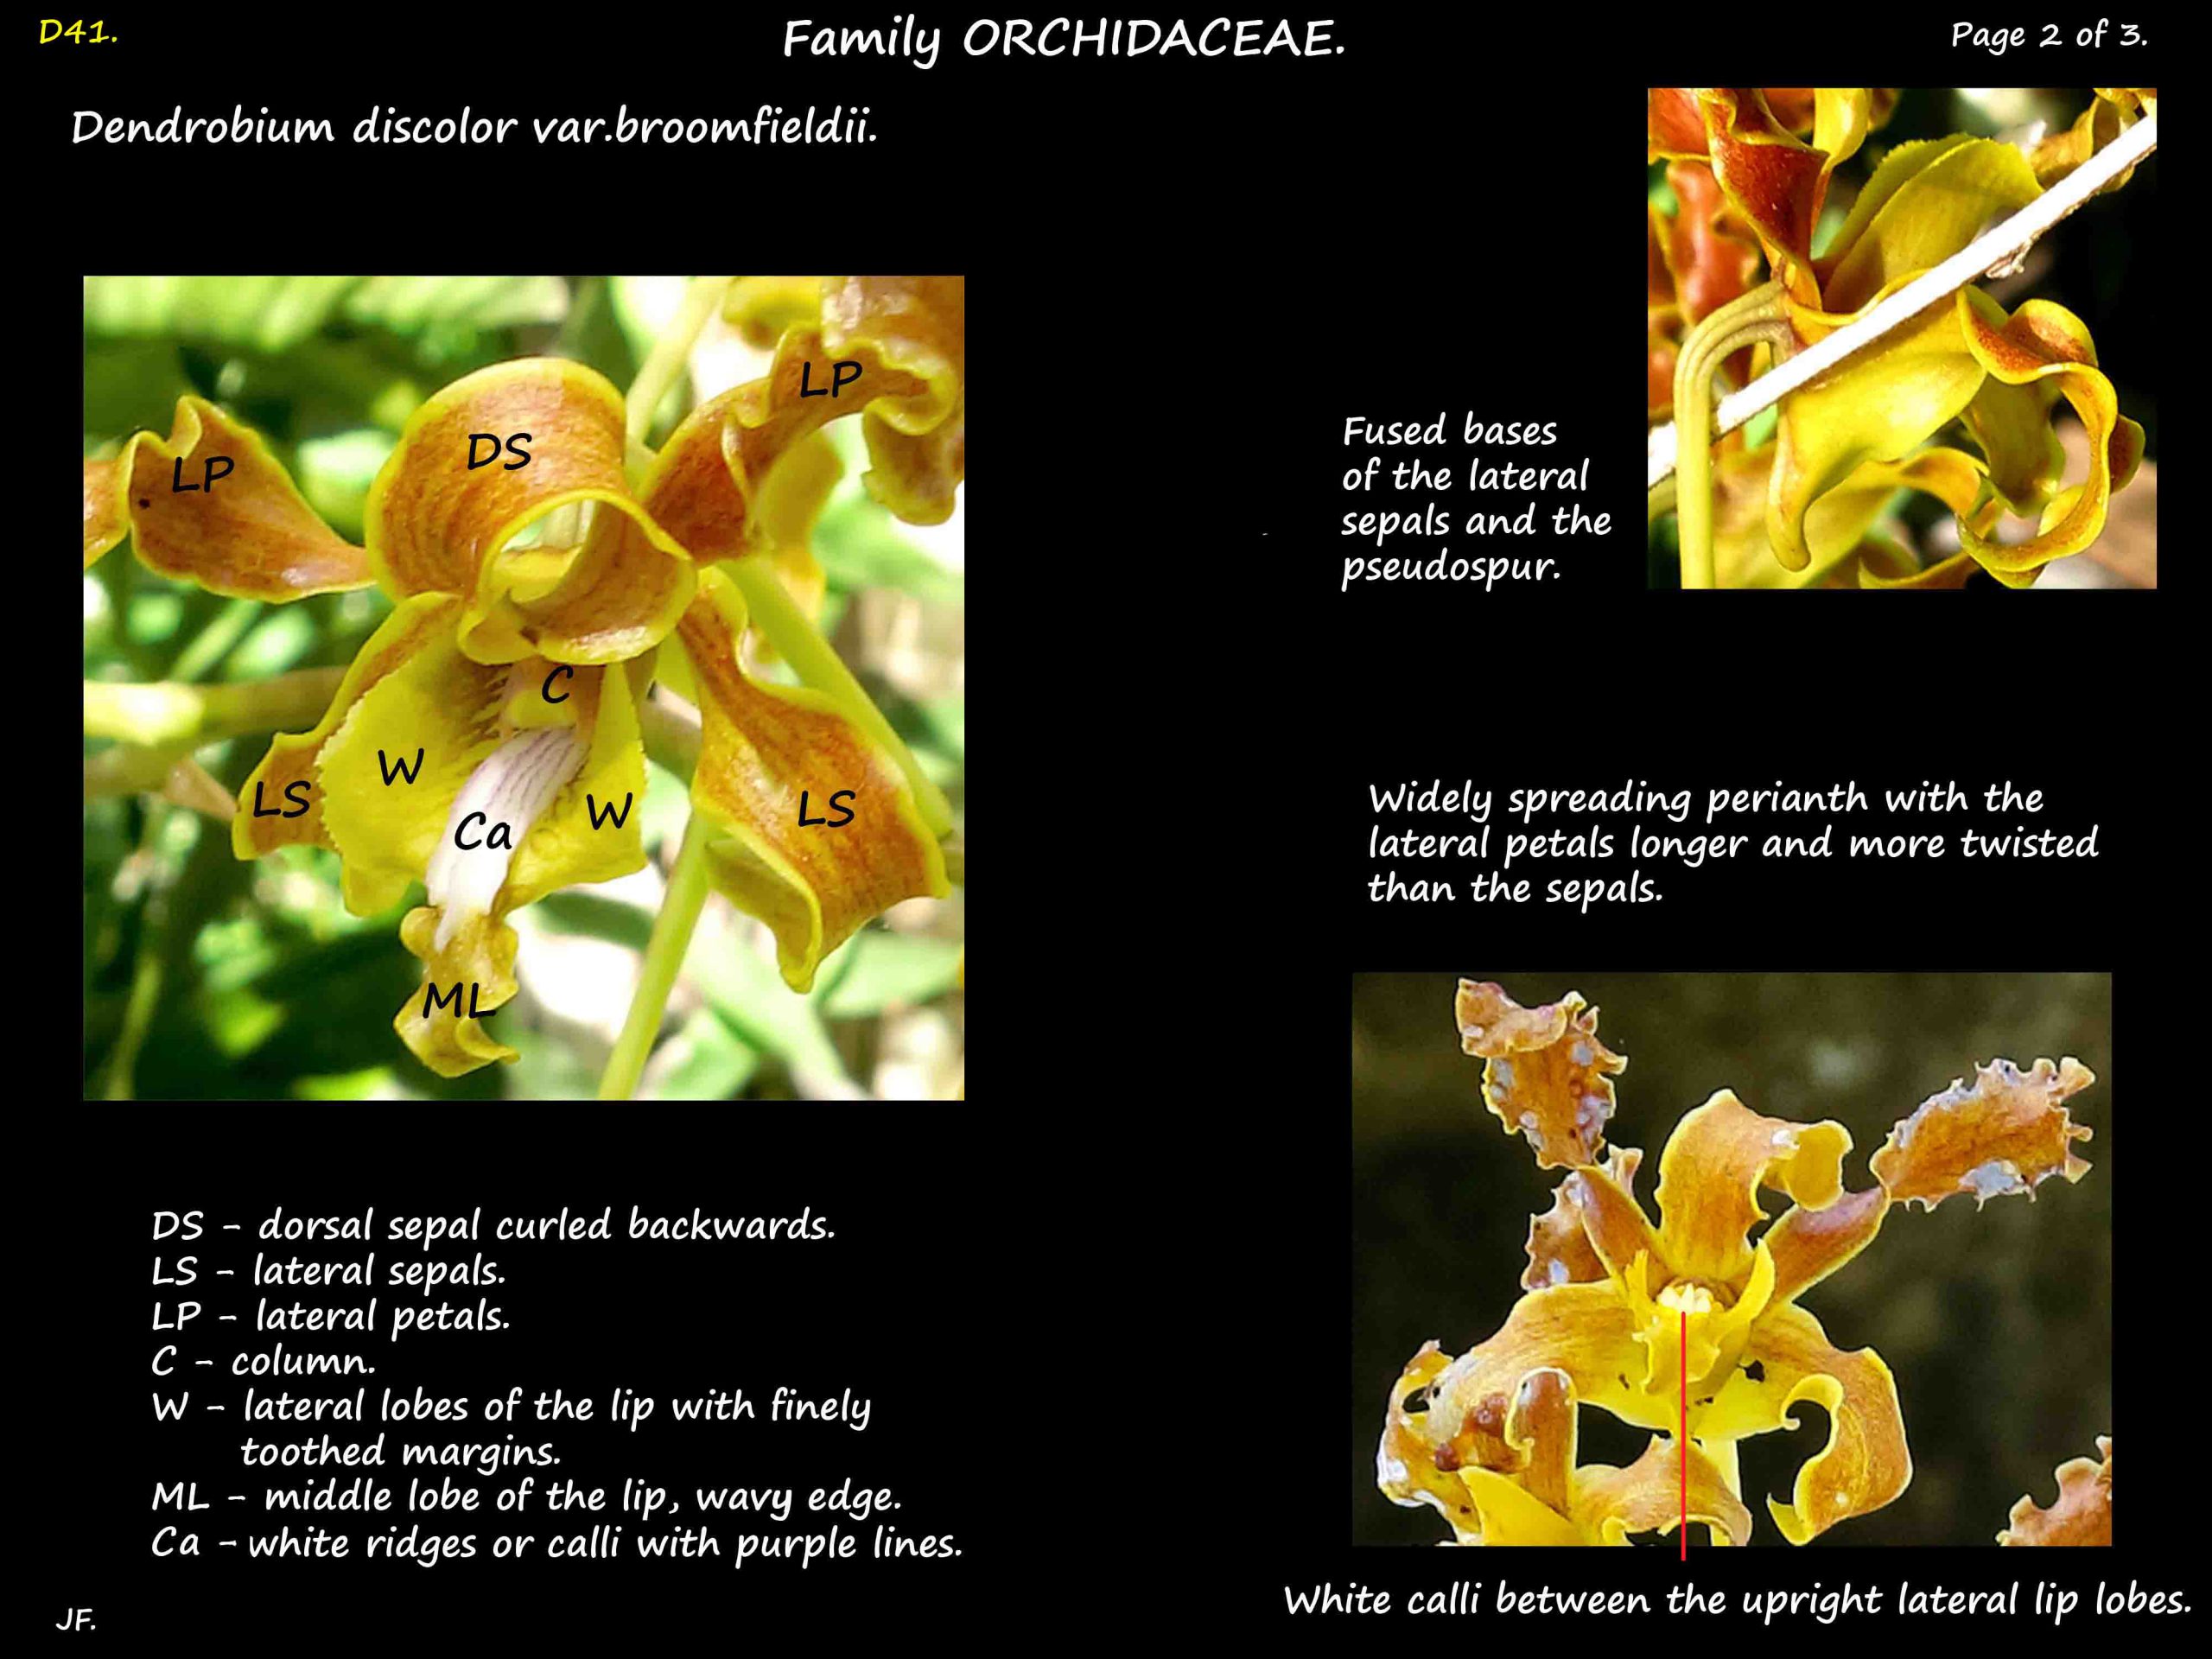 2 Dendrobium discolor flowers